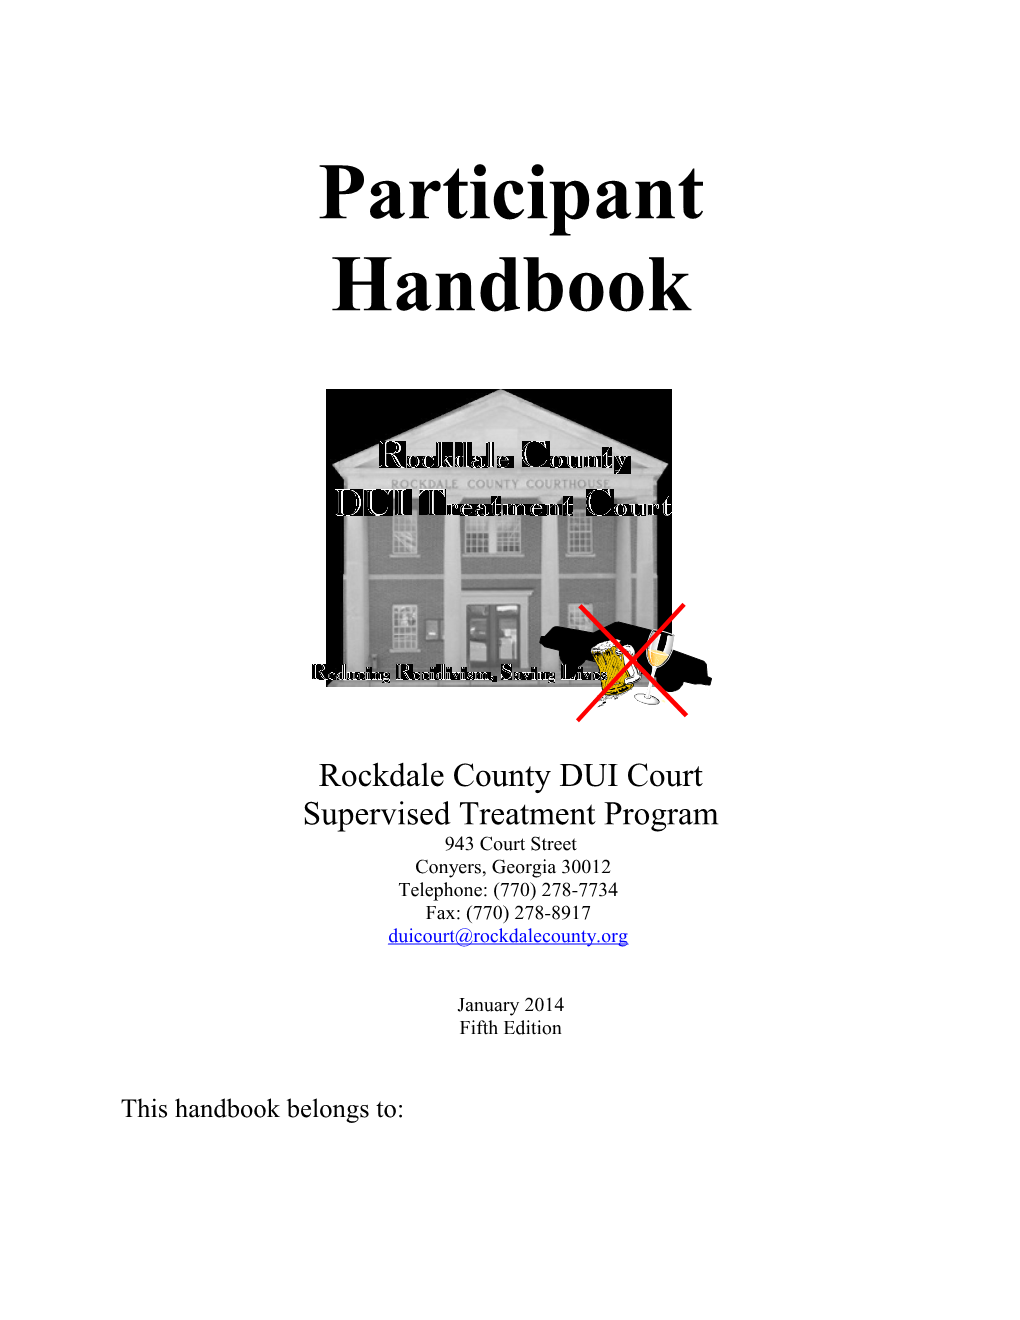 Rockdale County DUI Court